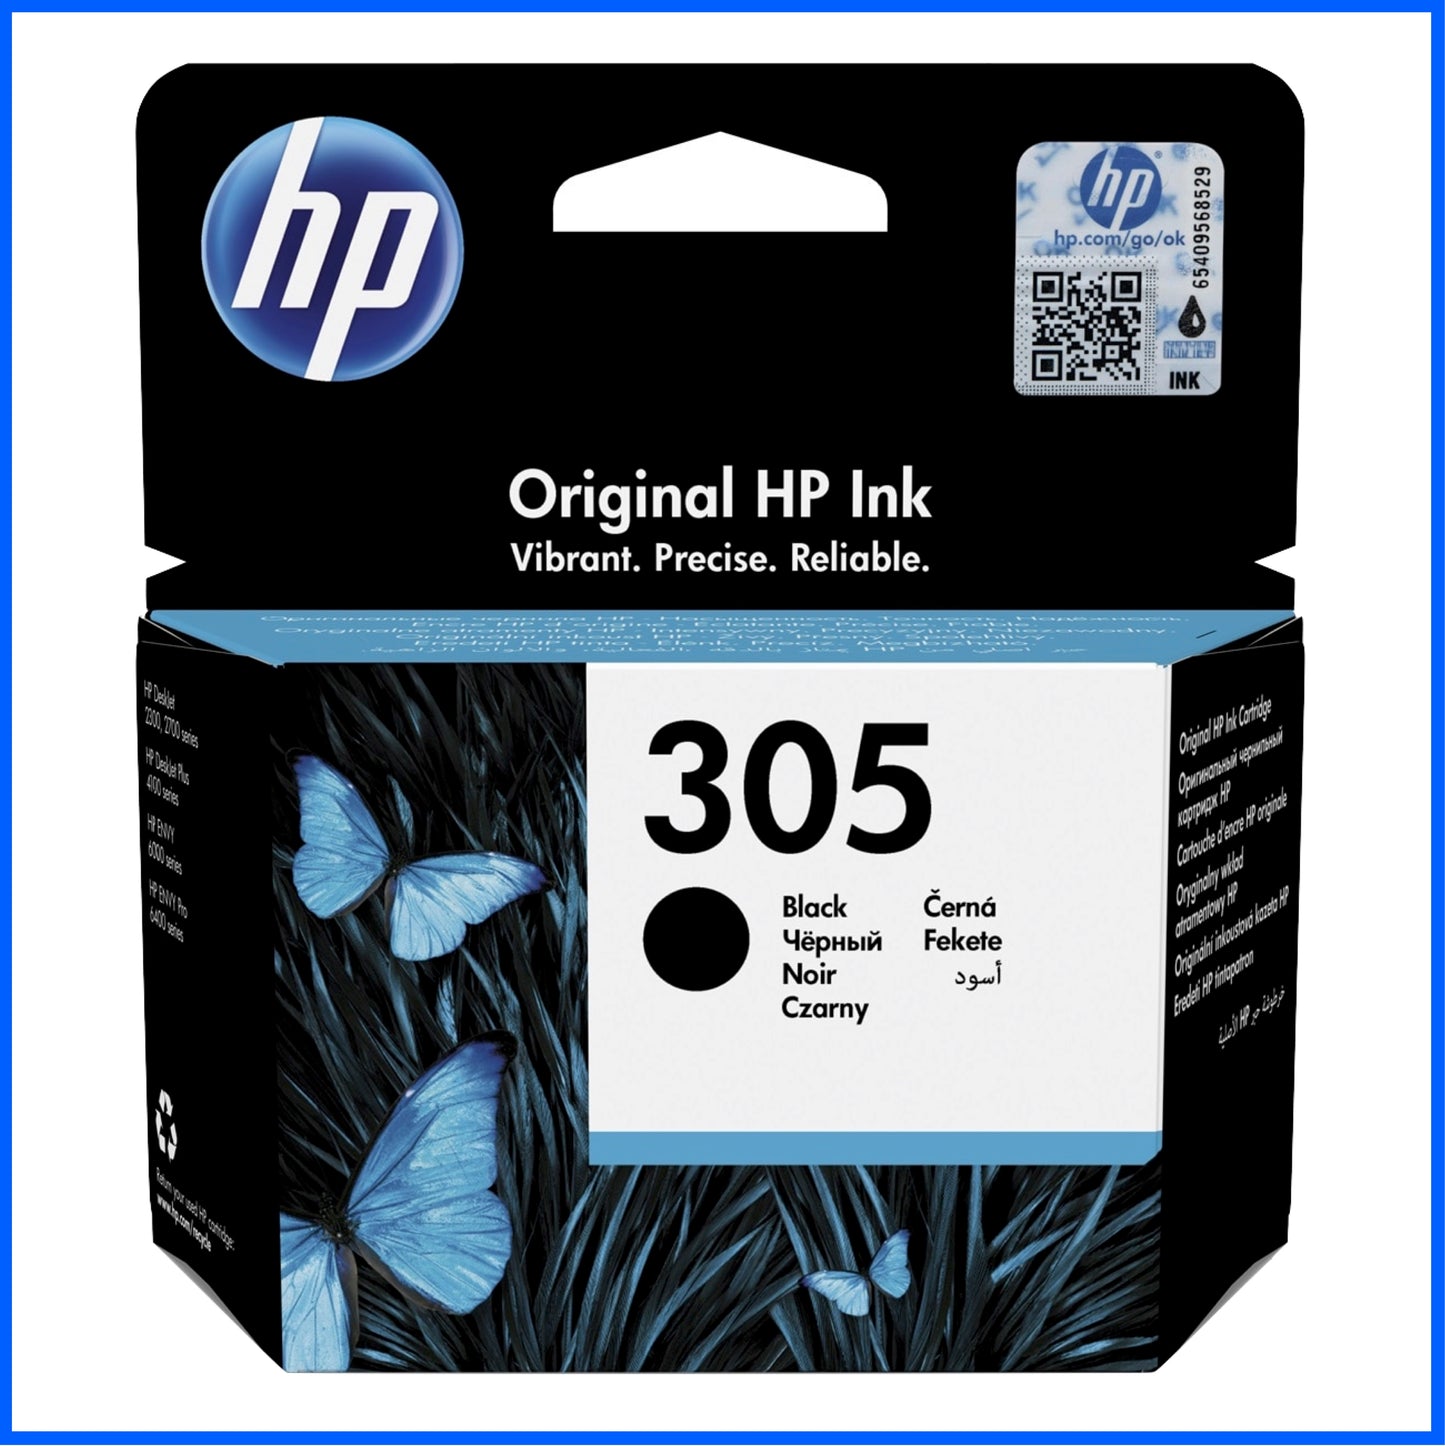 HP 305 Black Ink Cartridge (Original)